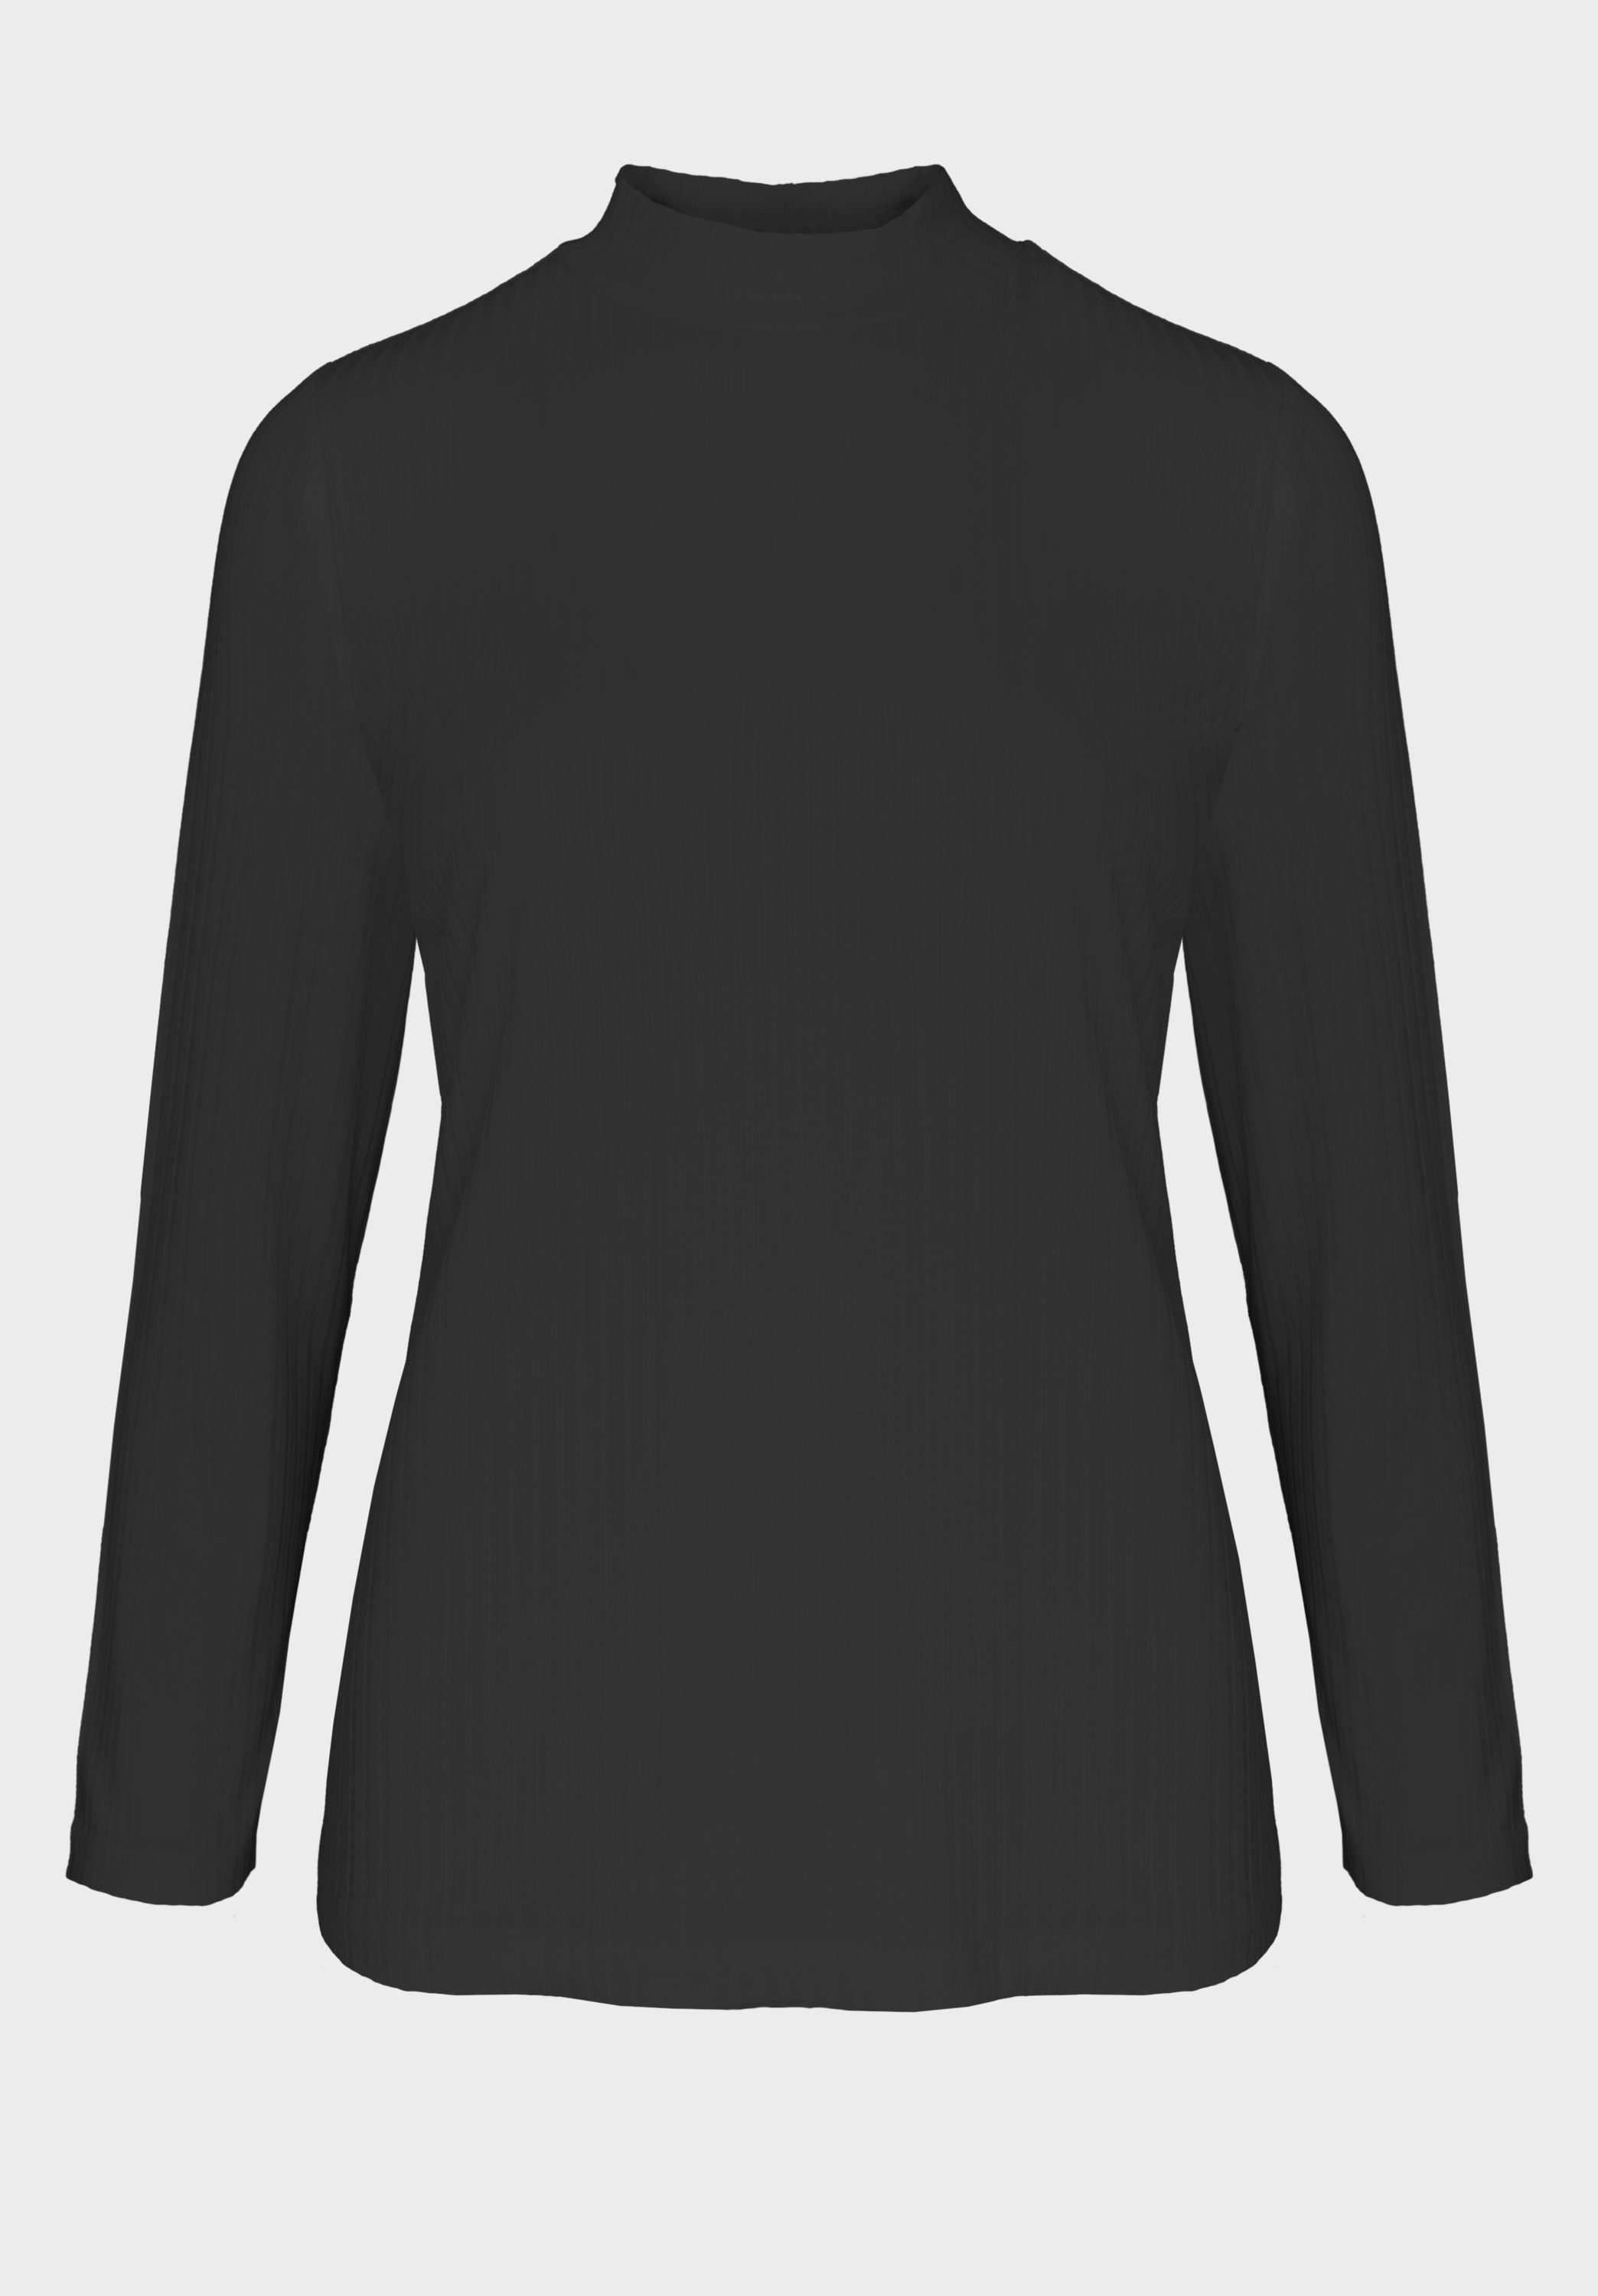 bianca Langarmshirt GRETA mit modernem Turtle-Neck in coolen Trendfarben black